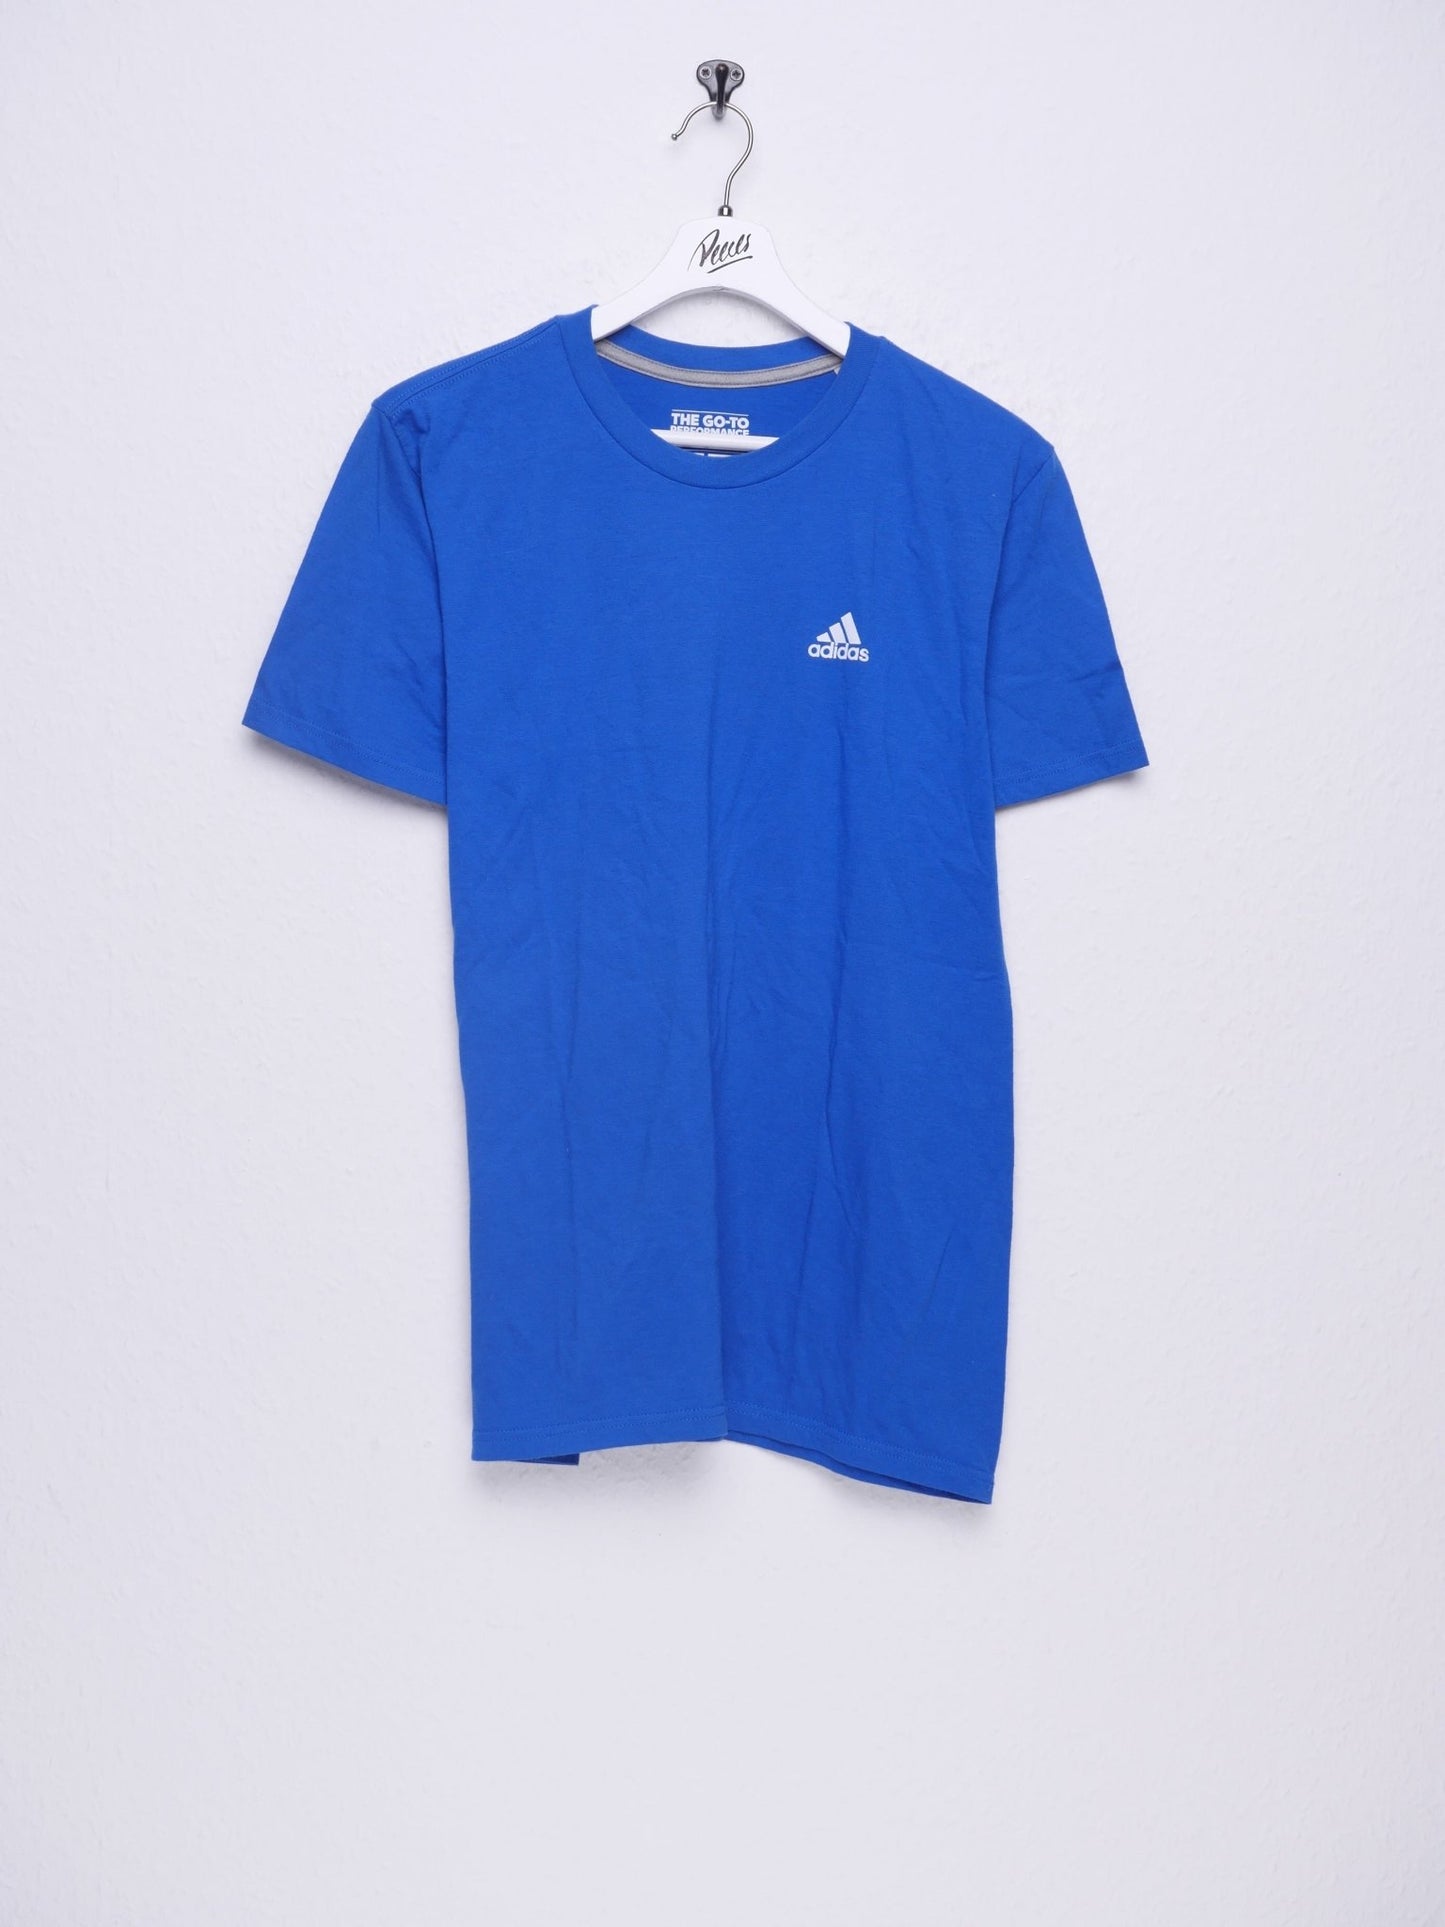 Adidas printed Logo blue Shirt - Peeces